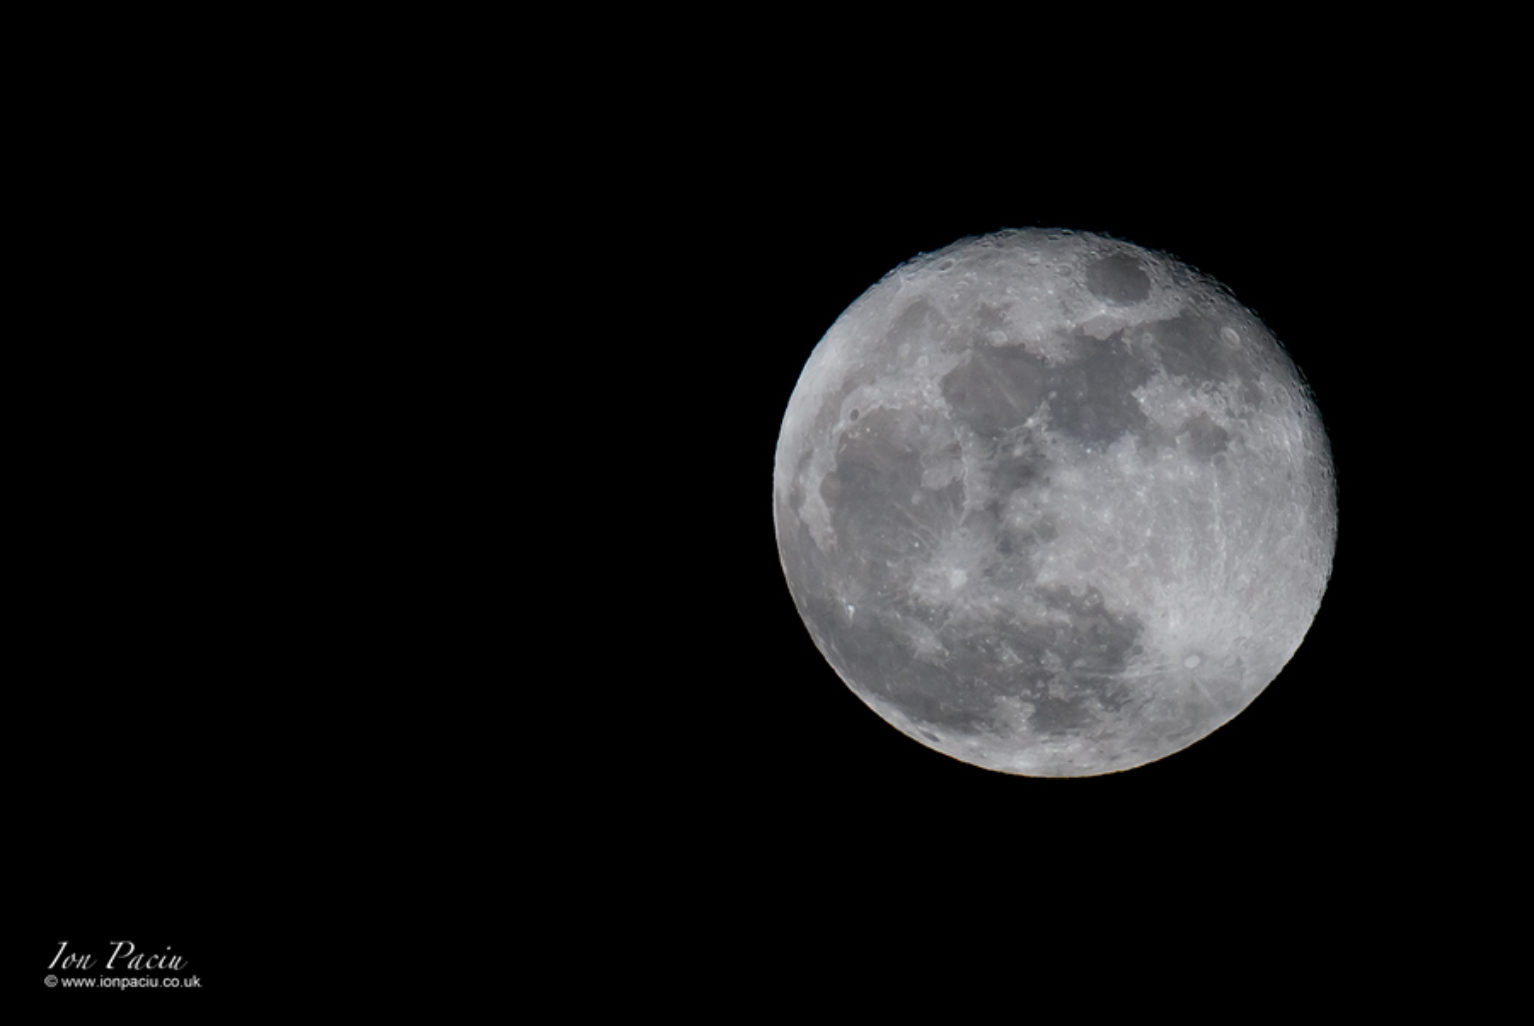 sigma600-sigma-telephoto-lens-moon-london-uk-ion-paciu